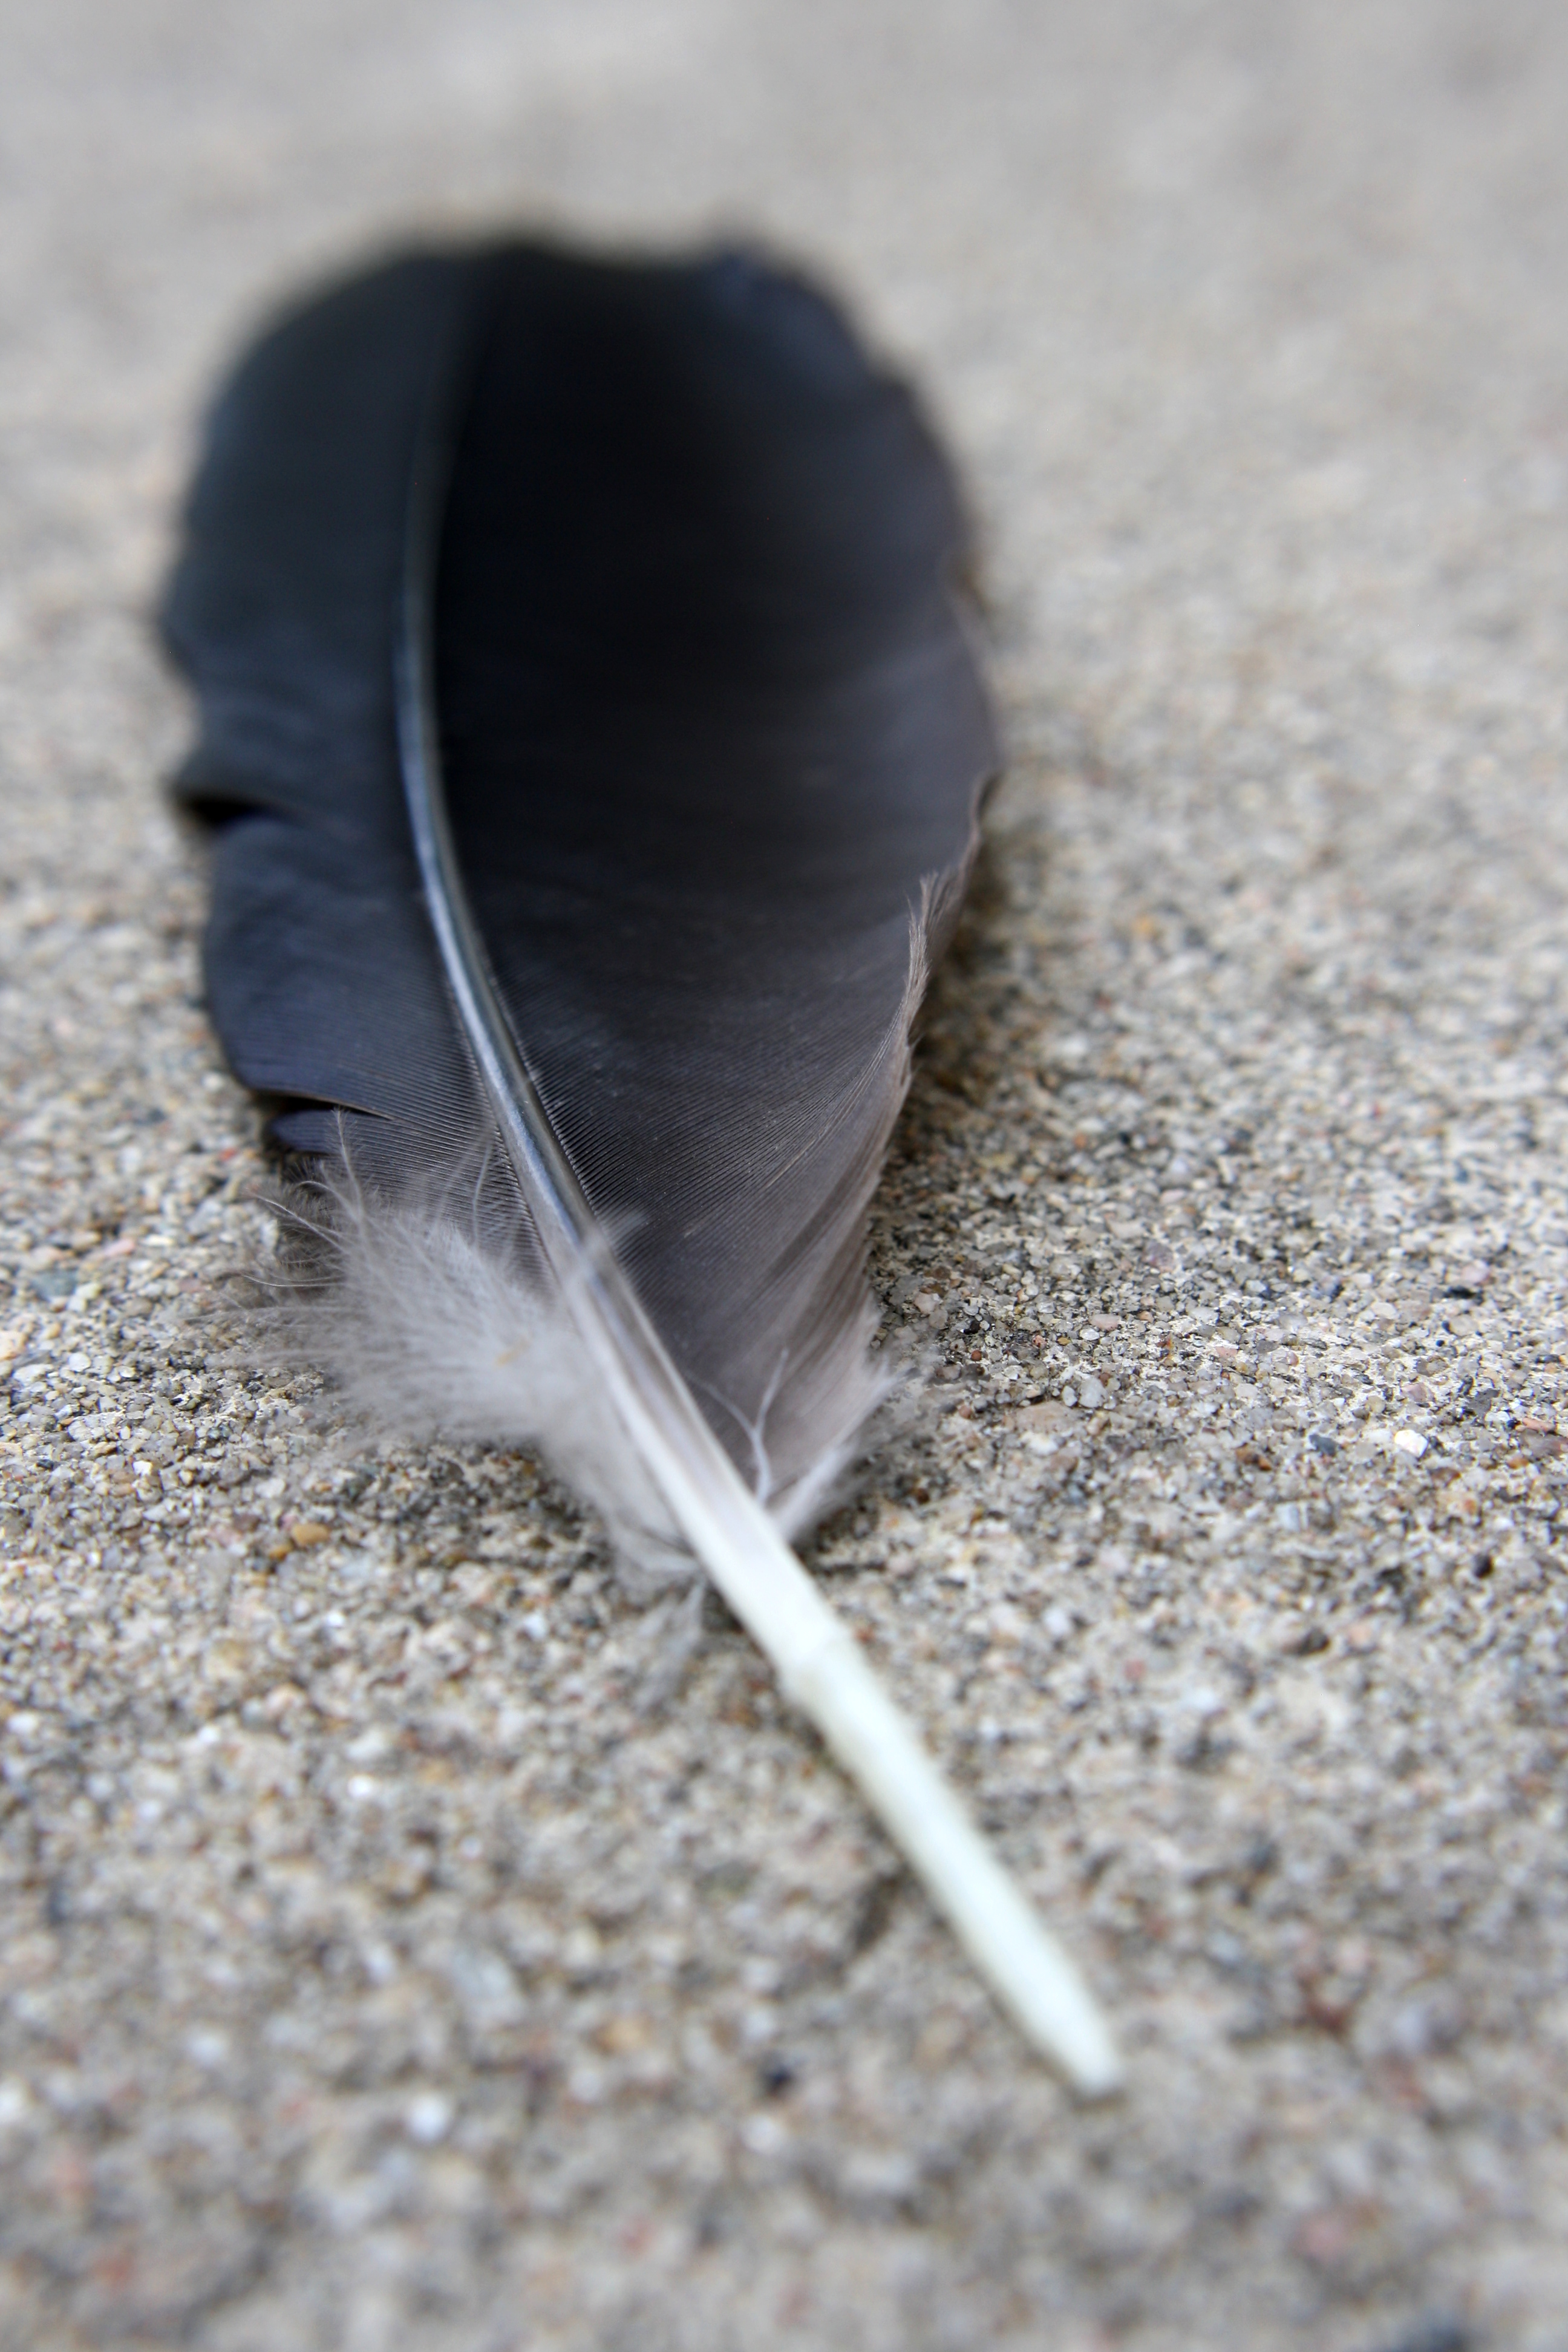 Feather Picture | Free Photograph | Photos Public Domain